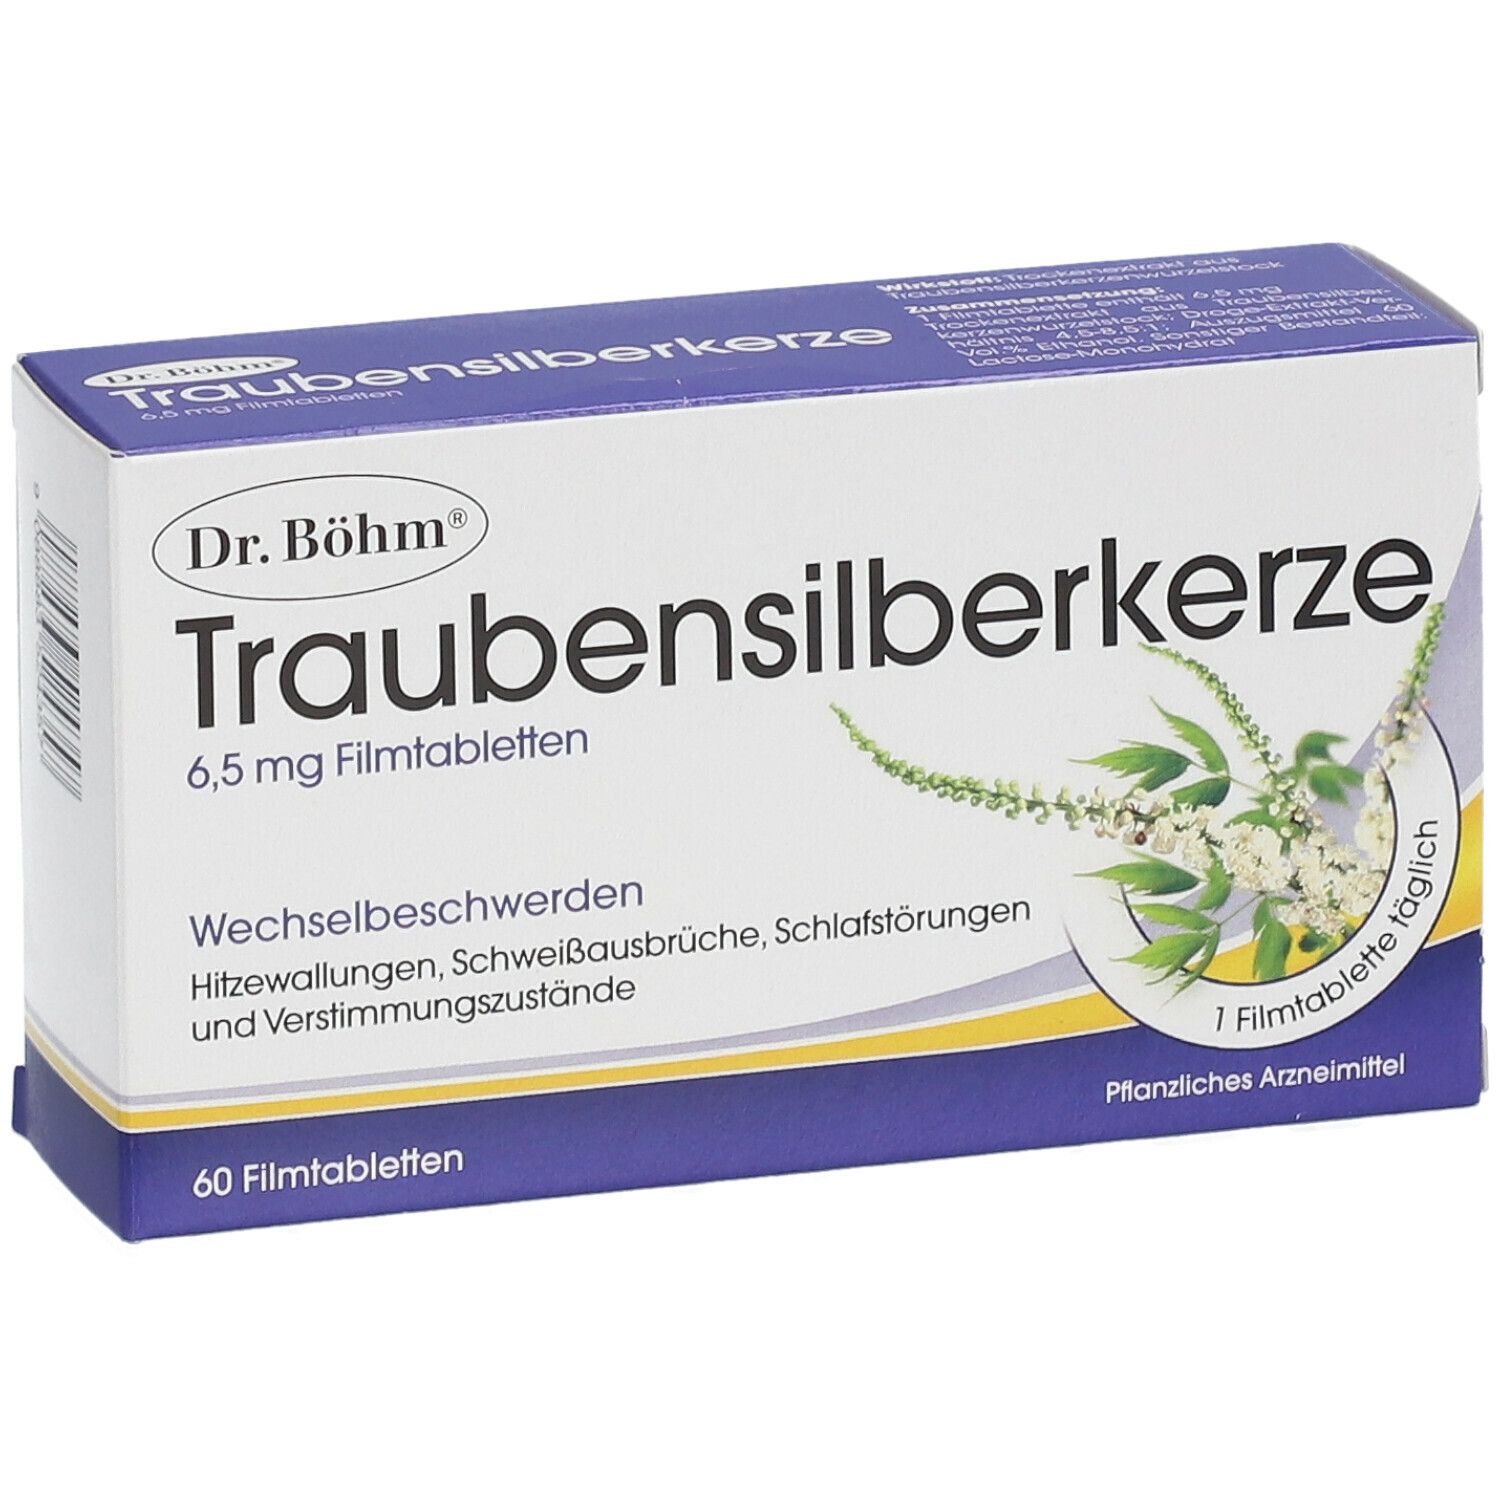 Dr. Böhm® Traubensilberkerze 6,5 mg Filmtabletten